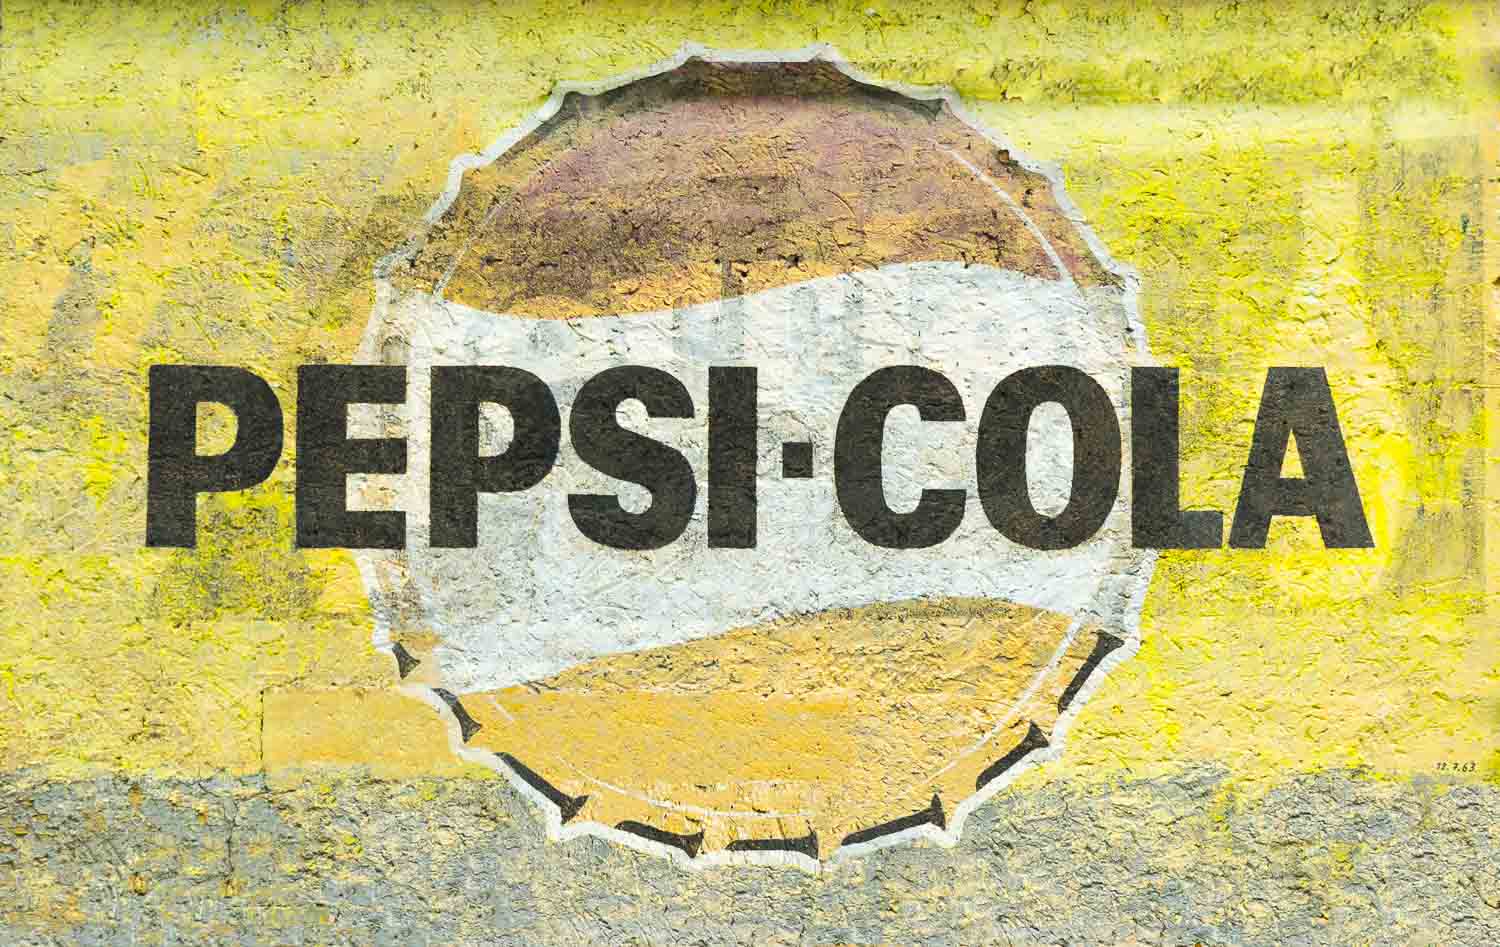 Old Pepsi-COLA Wall Advertisement